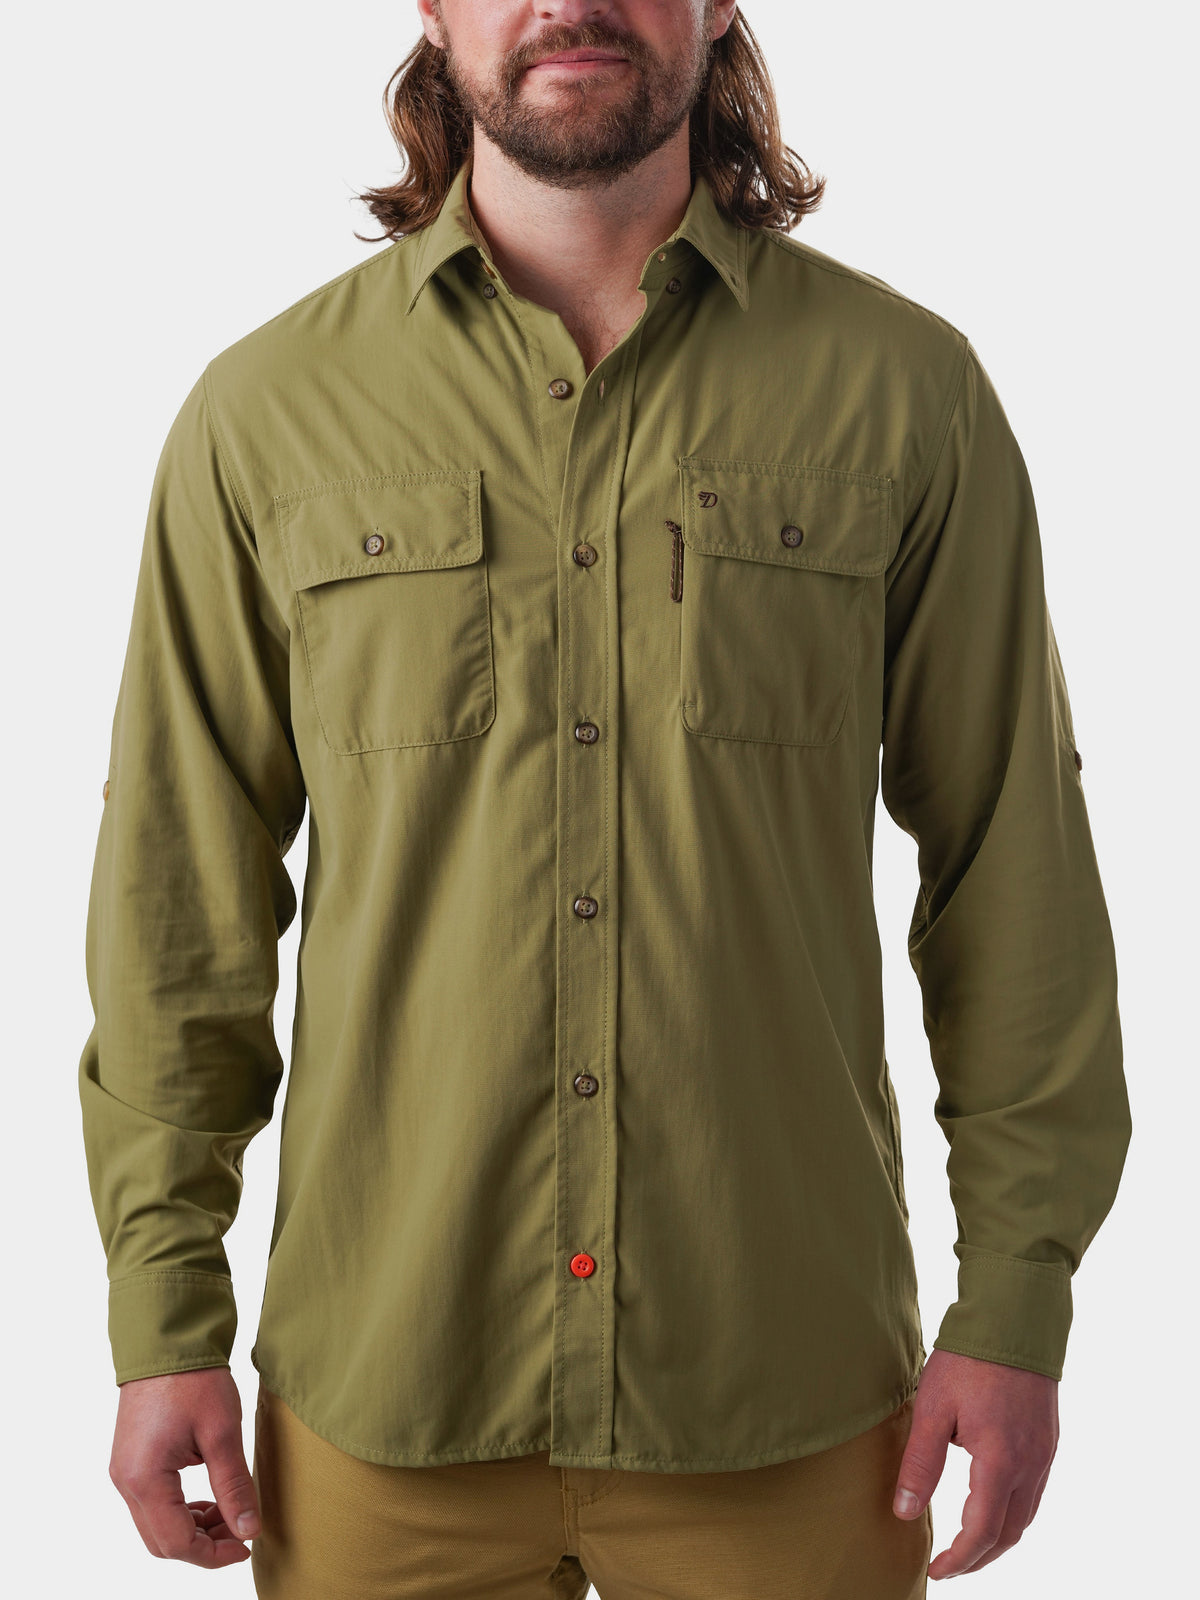 Field & Stream Men's L Vented Fishing Shirt Roll Tab Long Sleeve Army Green